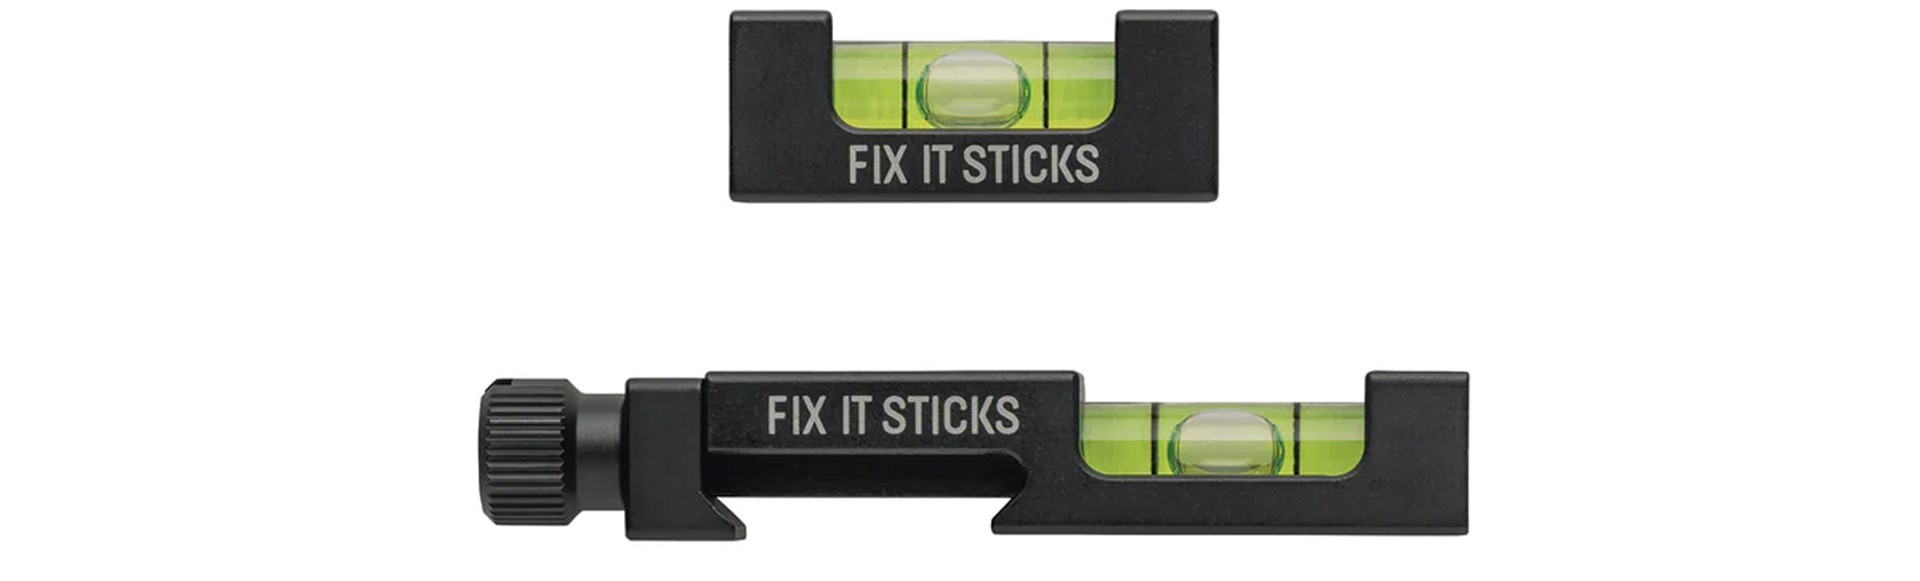 fix-it-sticks bubble level kit for scope leveling mounting on picatinny rail spirit level clamp metal